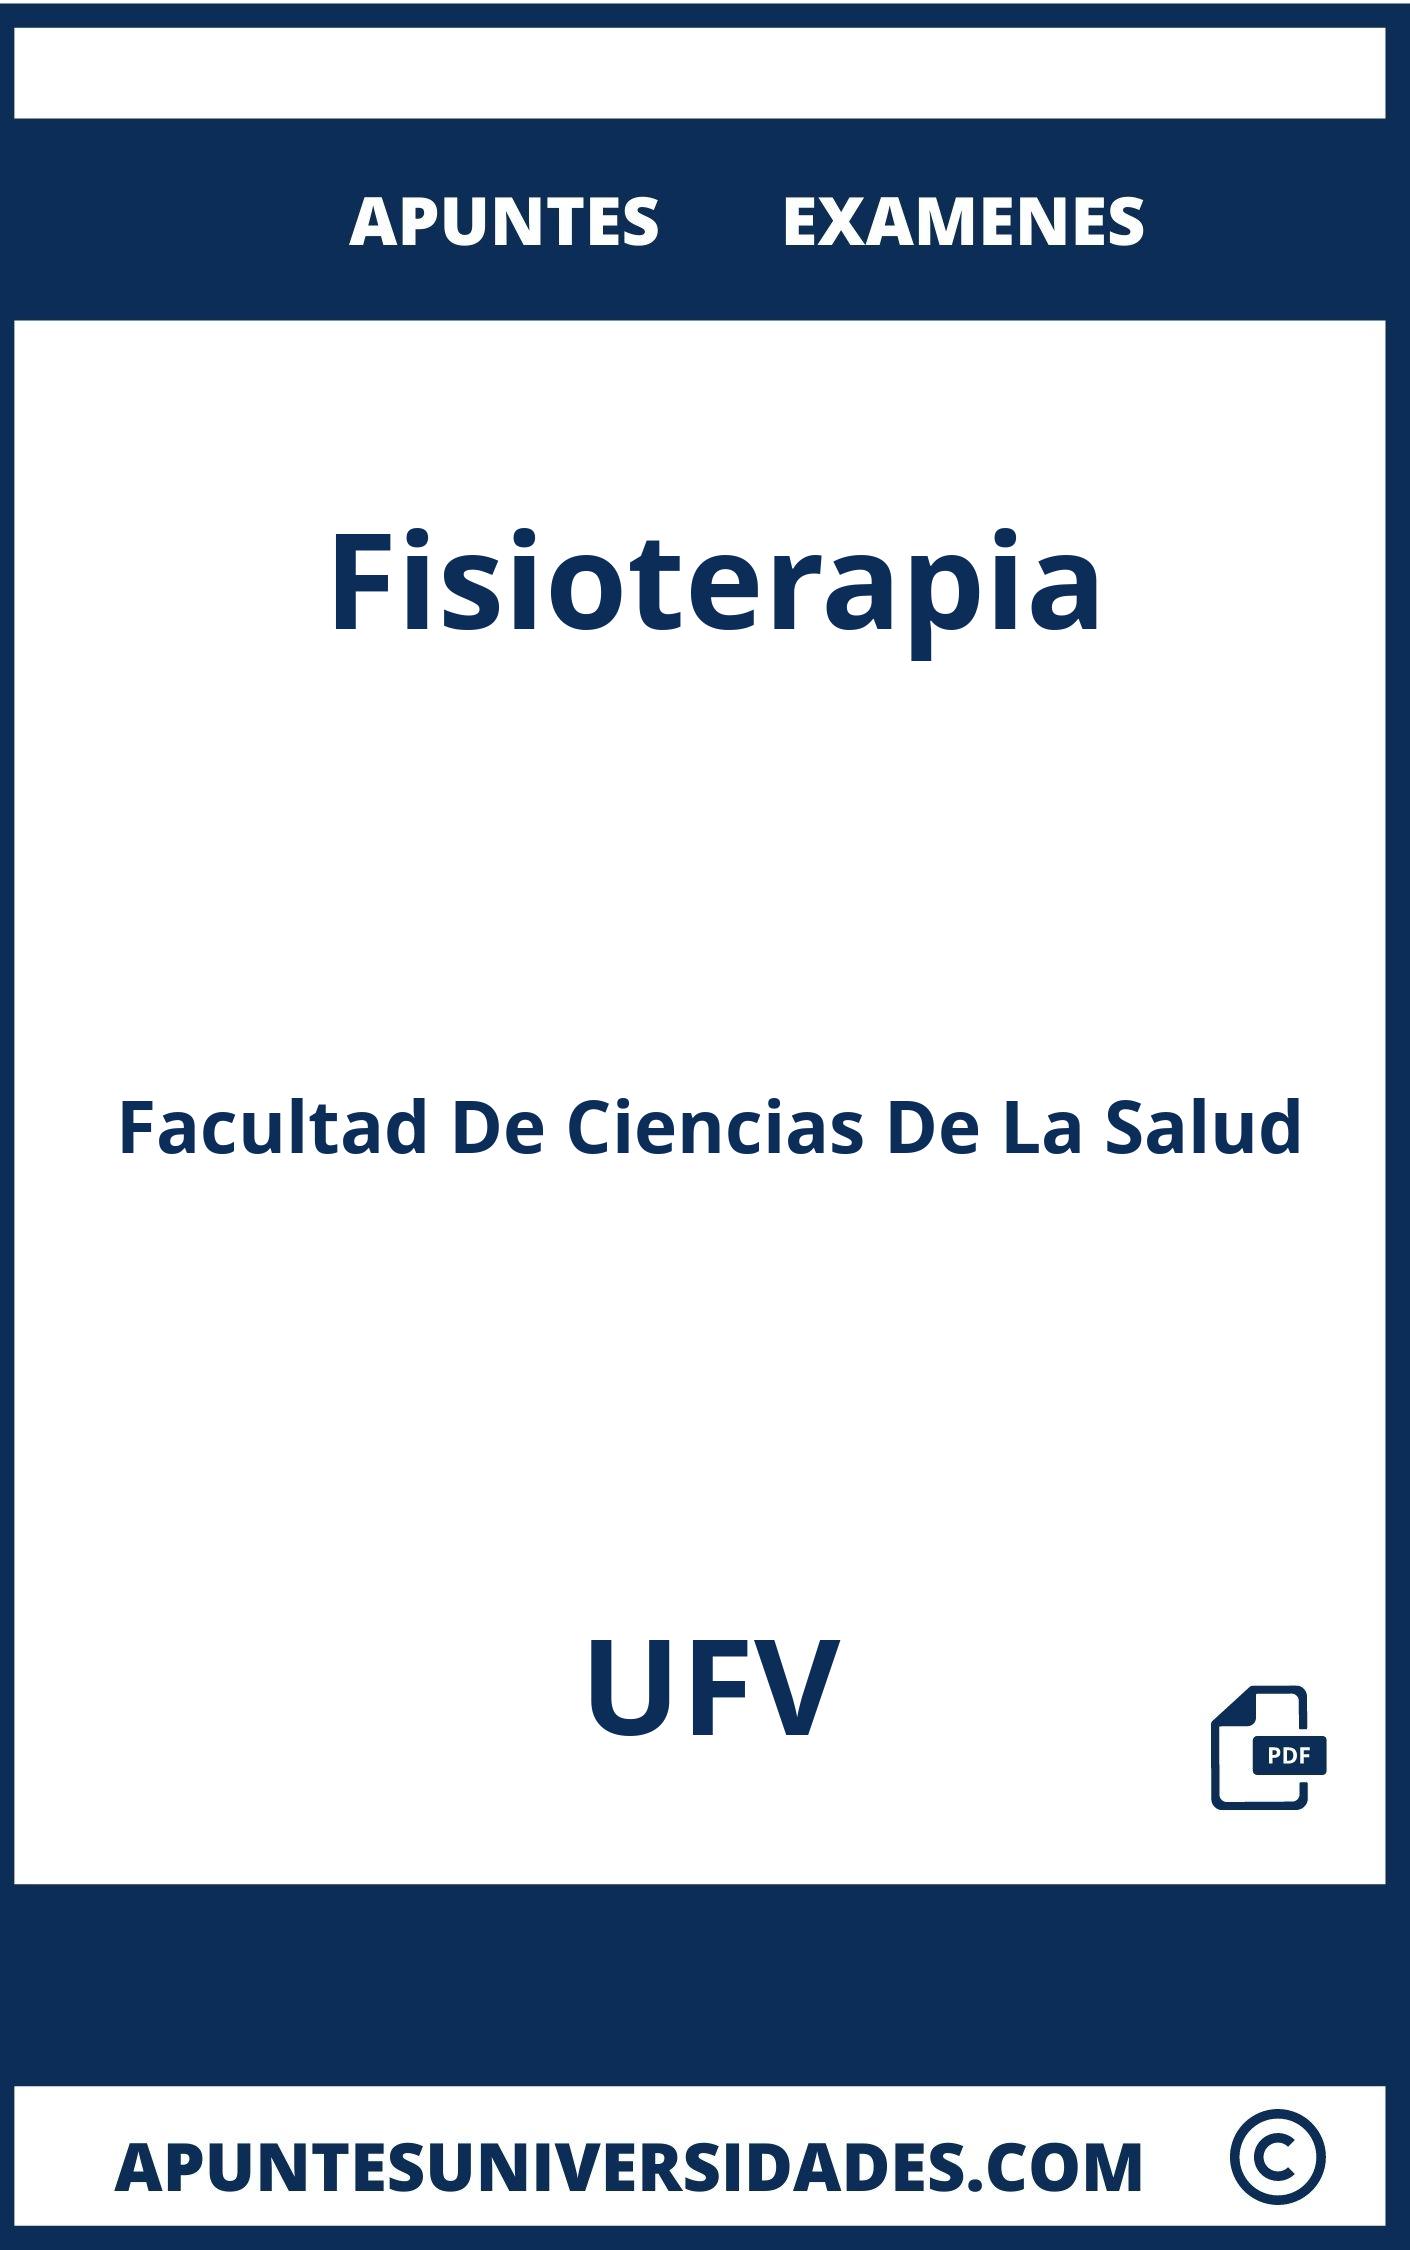 Fisioterapia UFV Examenes Apuntes